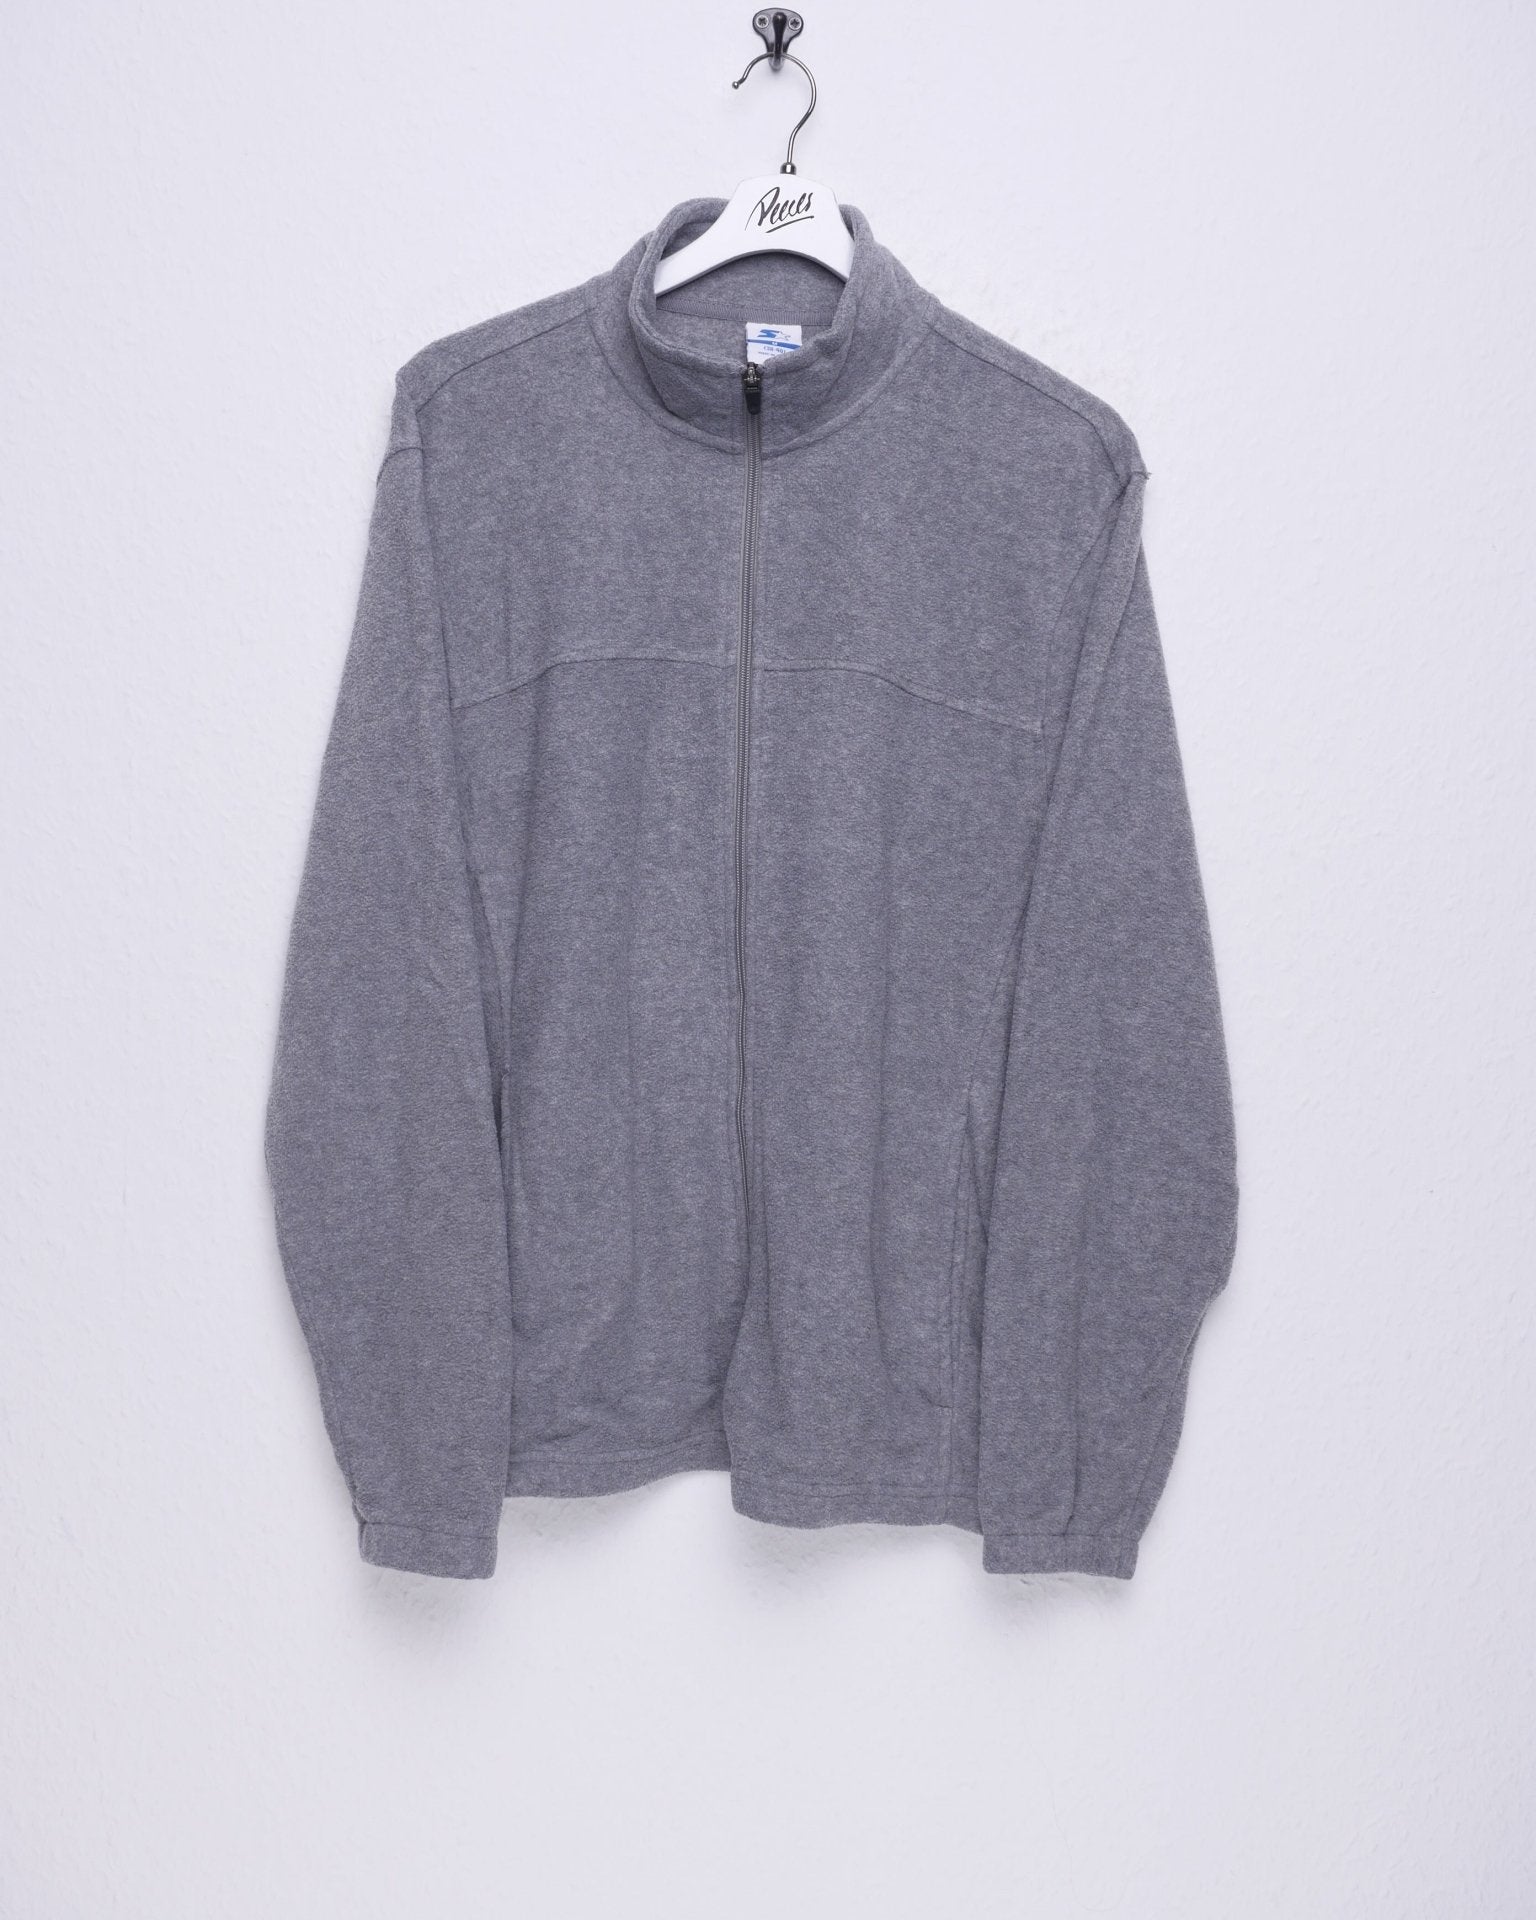 Starter embroidered Logo grey Fleece Zip Sweater - Peeces